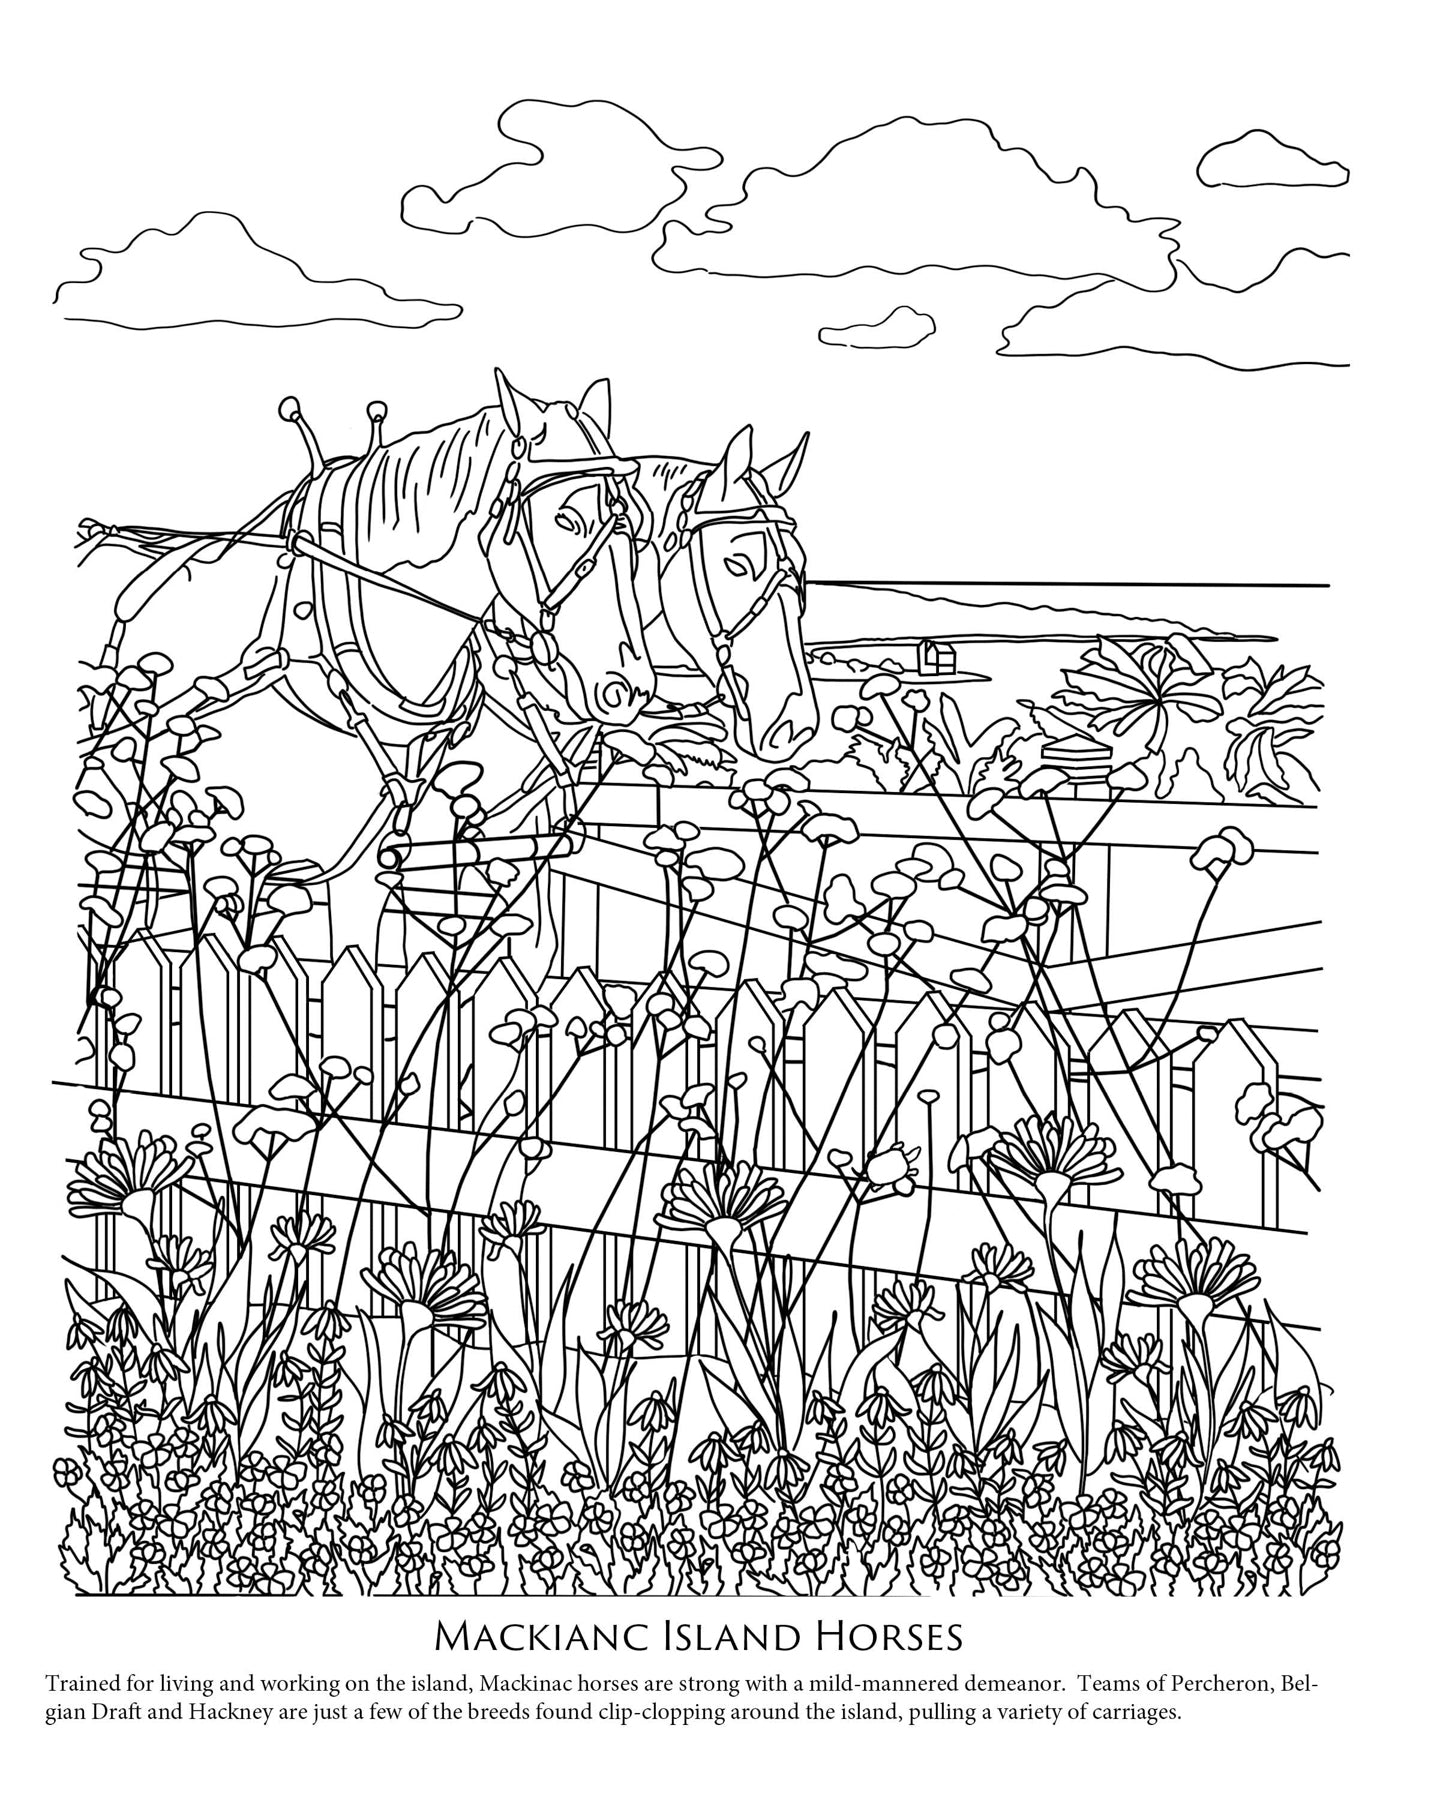 Mackinac Island Coloring book illustration of horses by Natalia Wohletz from MINDFUL MACKINAC.